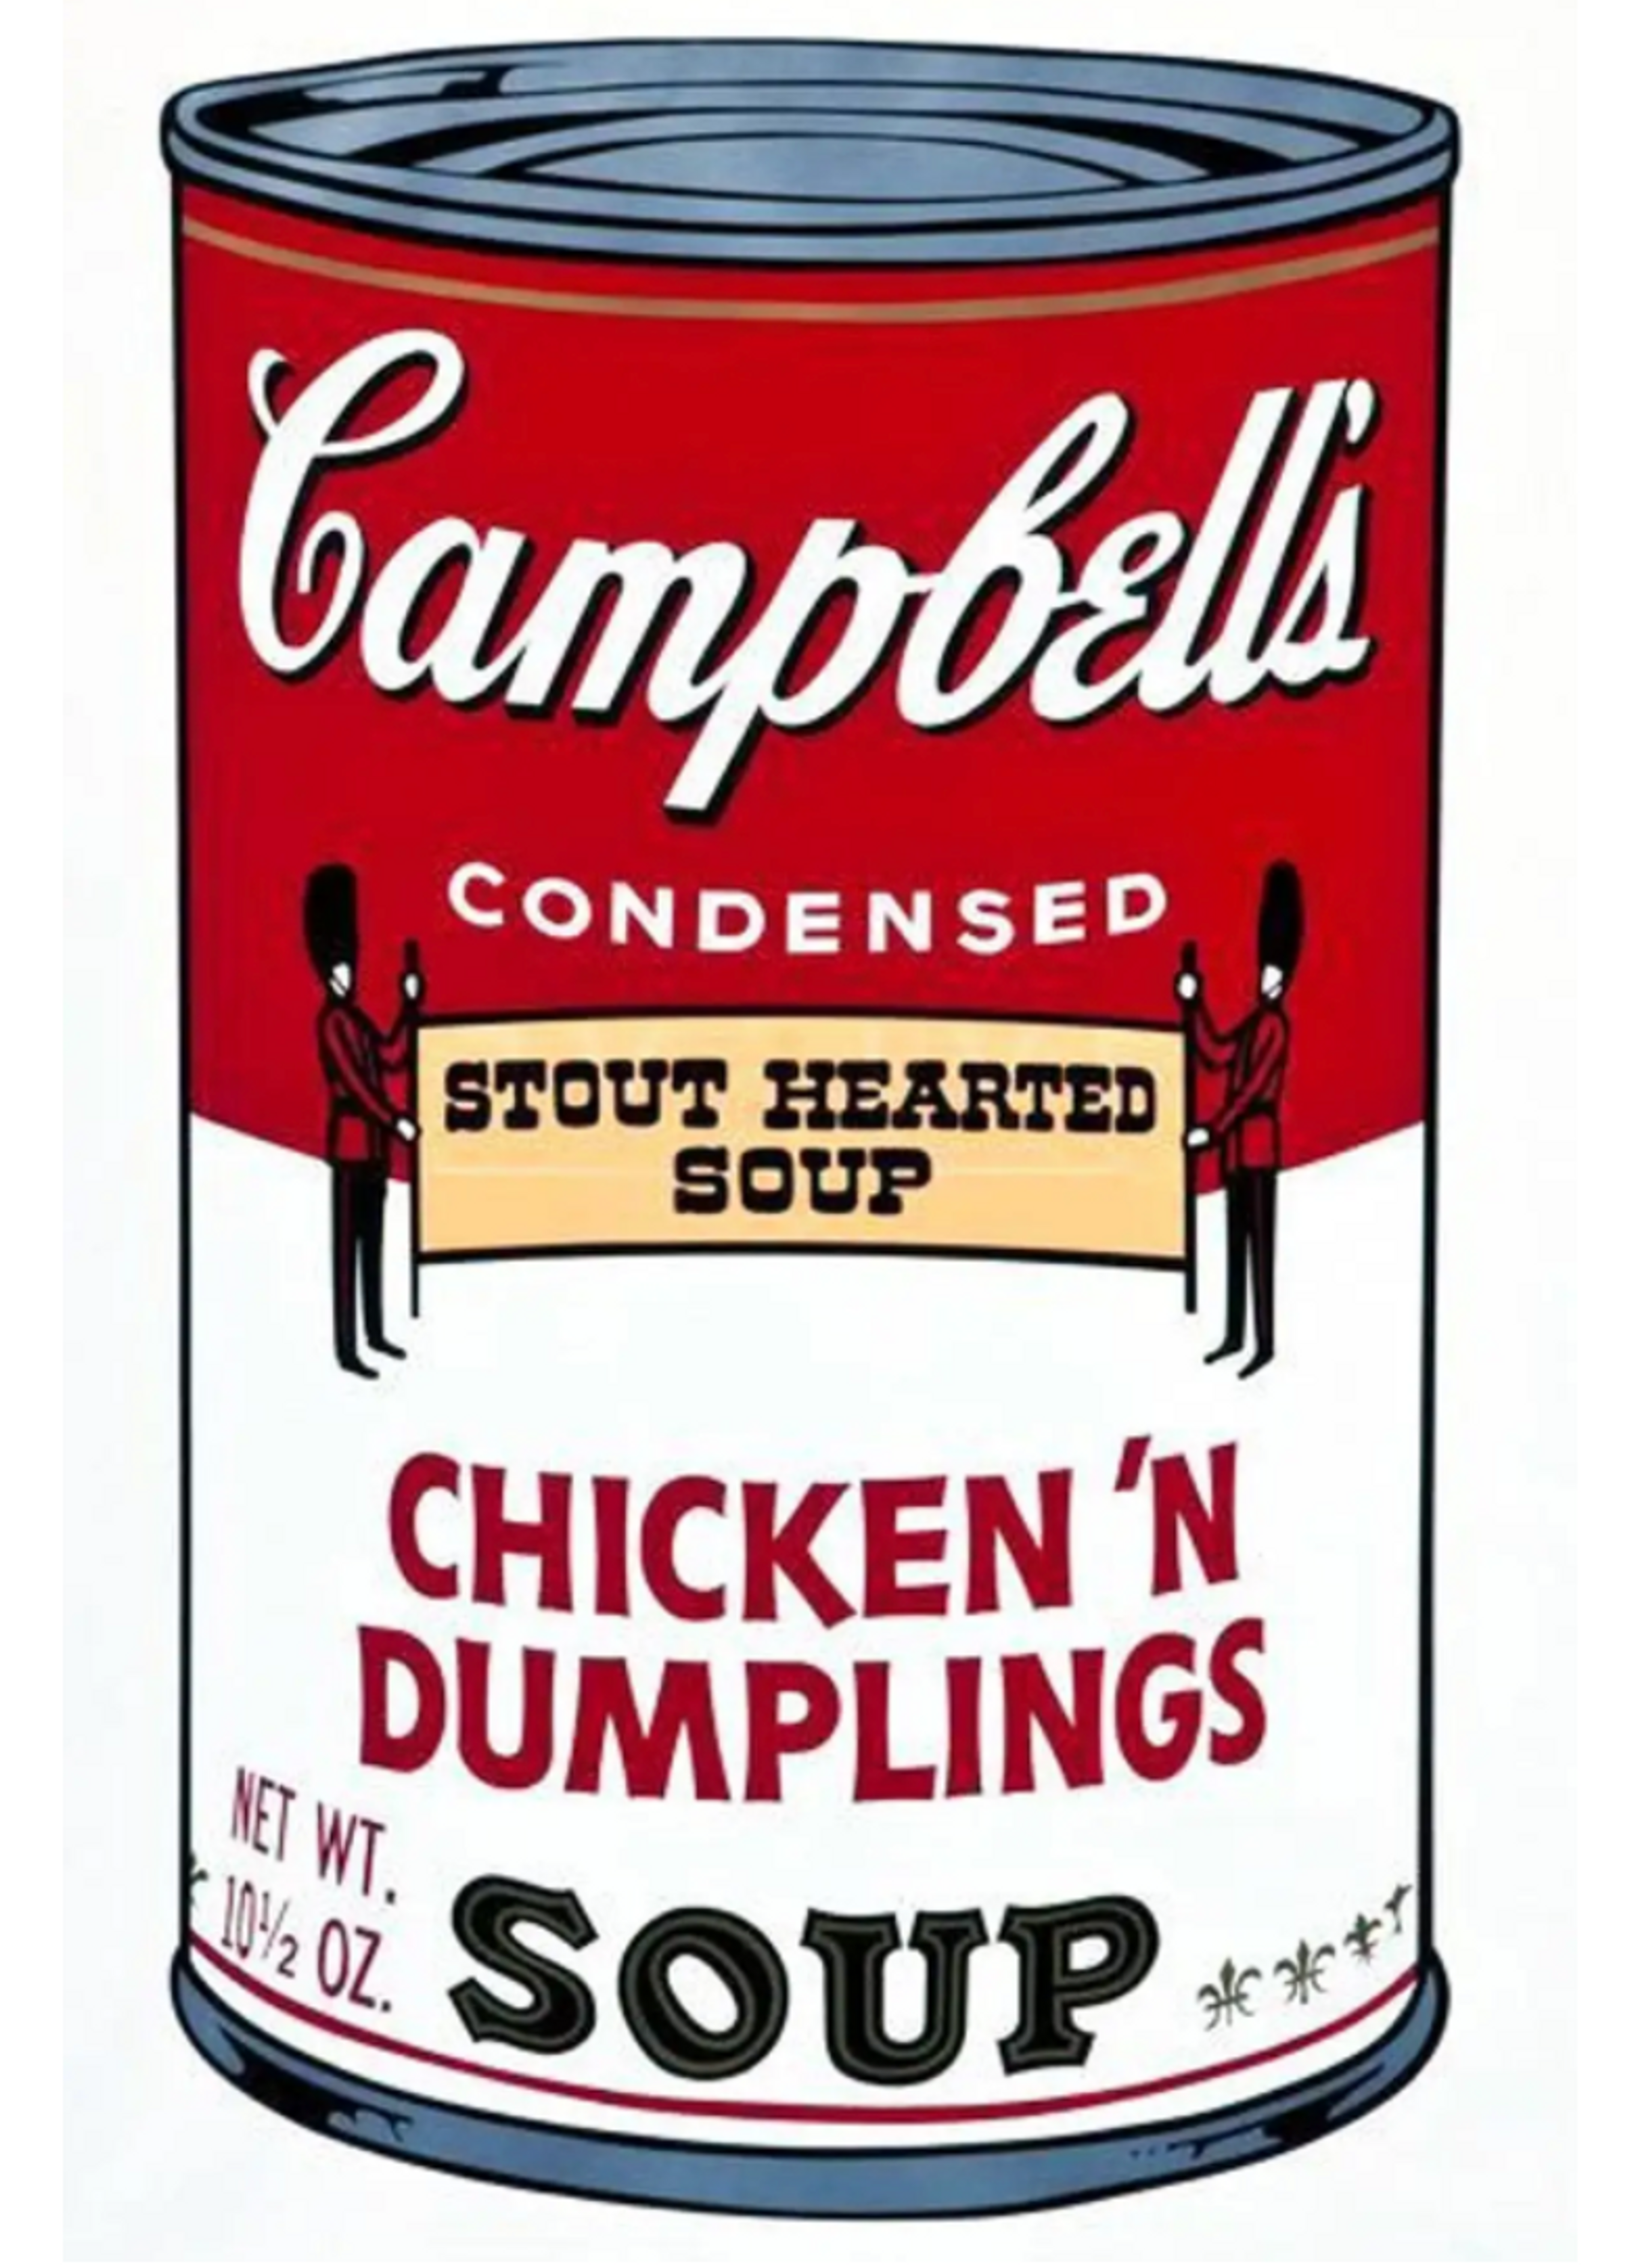 Campbells Soup II, Chicken n' Dumplings by Andy Warhol 